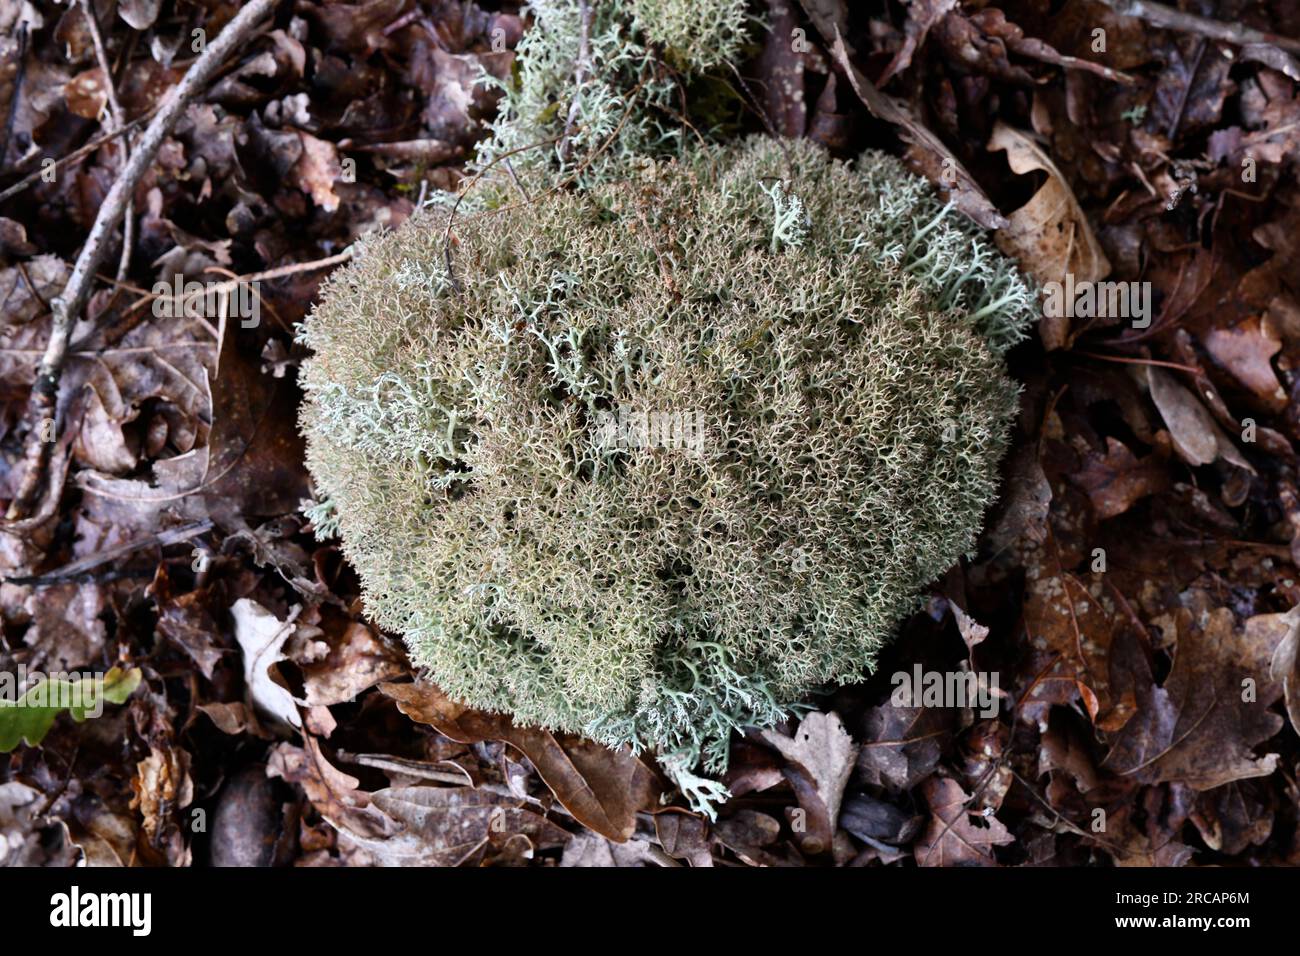 Cladonia arbuscula is a fruticose lichen. This photo was taken in Ínsua, Portgal. Stock Photo